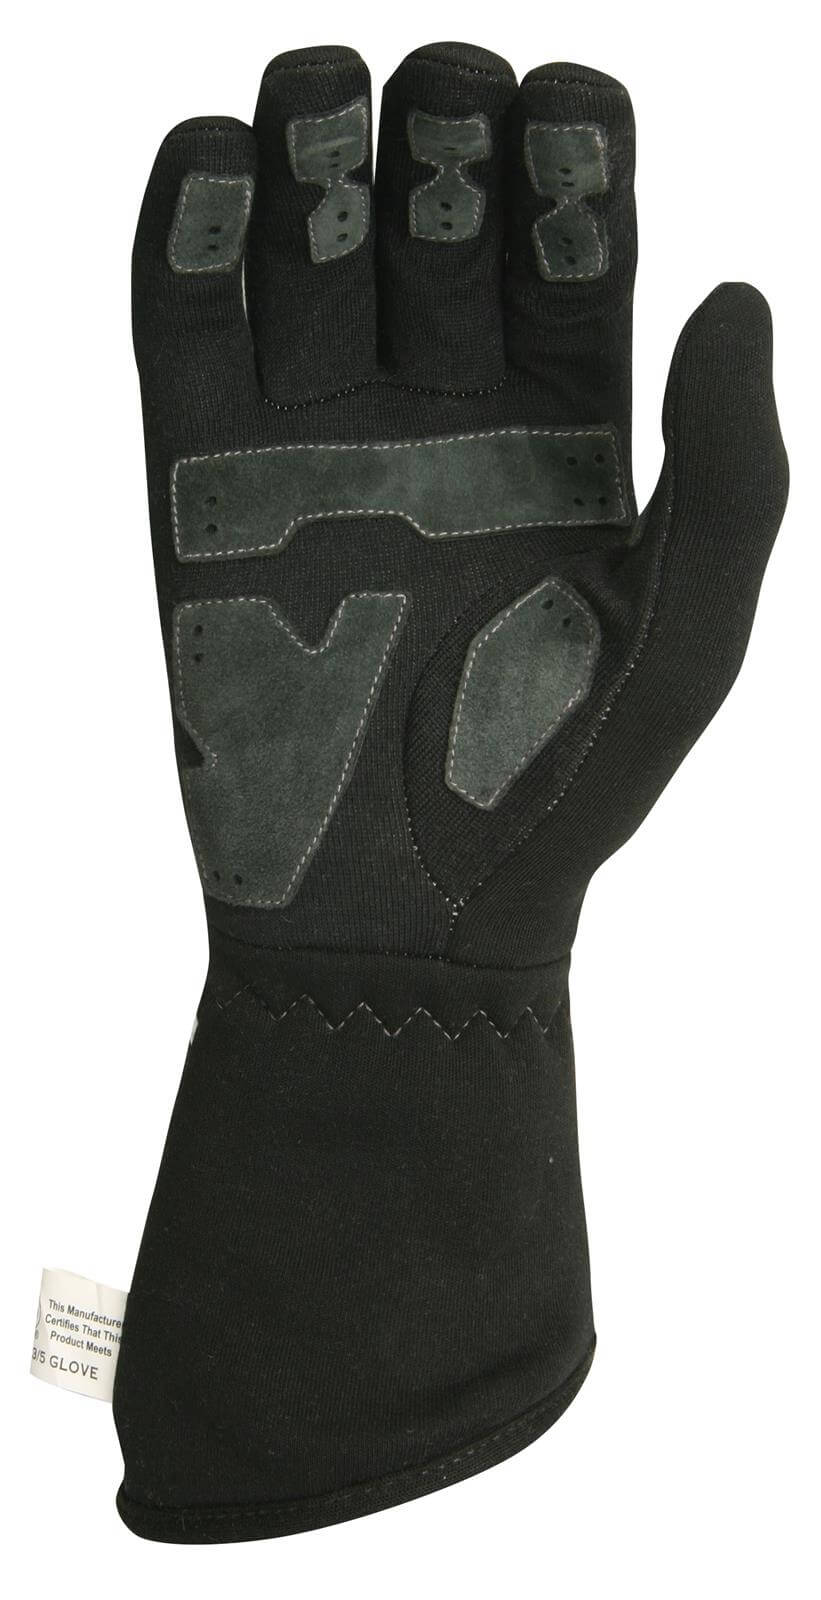 G6 Racing Gloves - $104.95